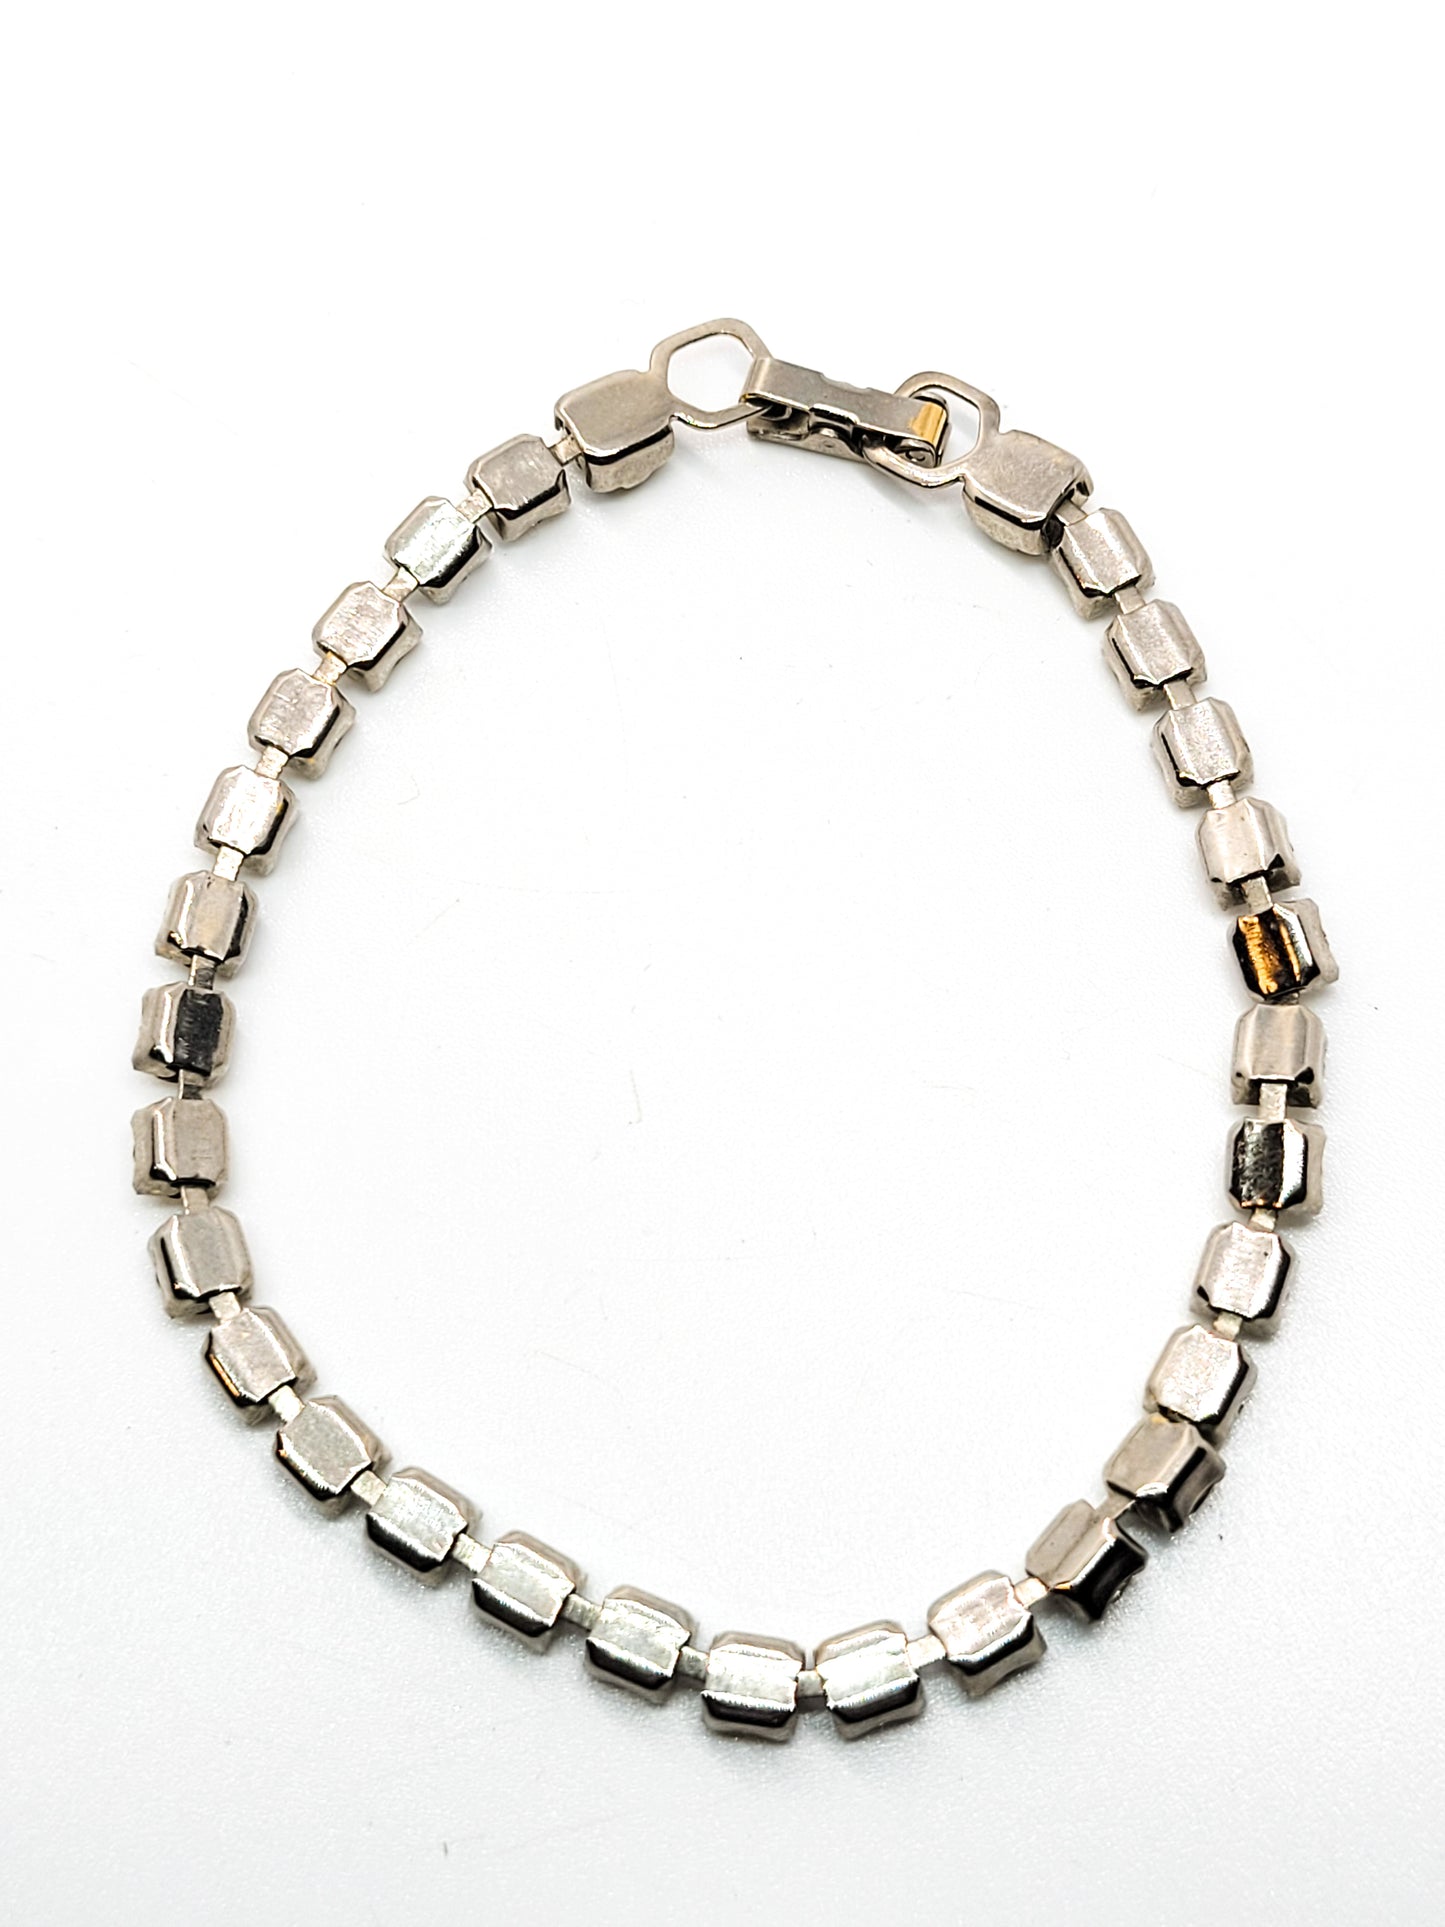 Dainty Single row simple clear silver toned vintage rhinestone tennis bracelet